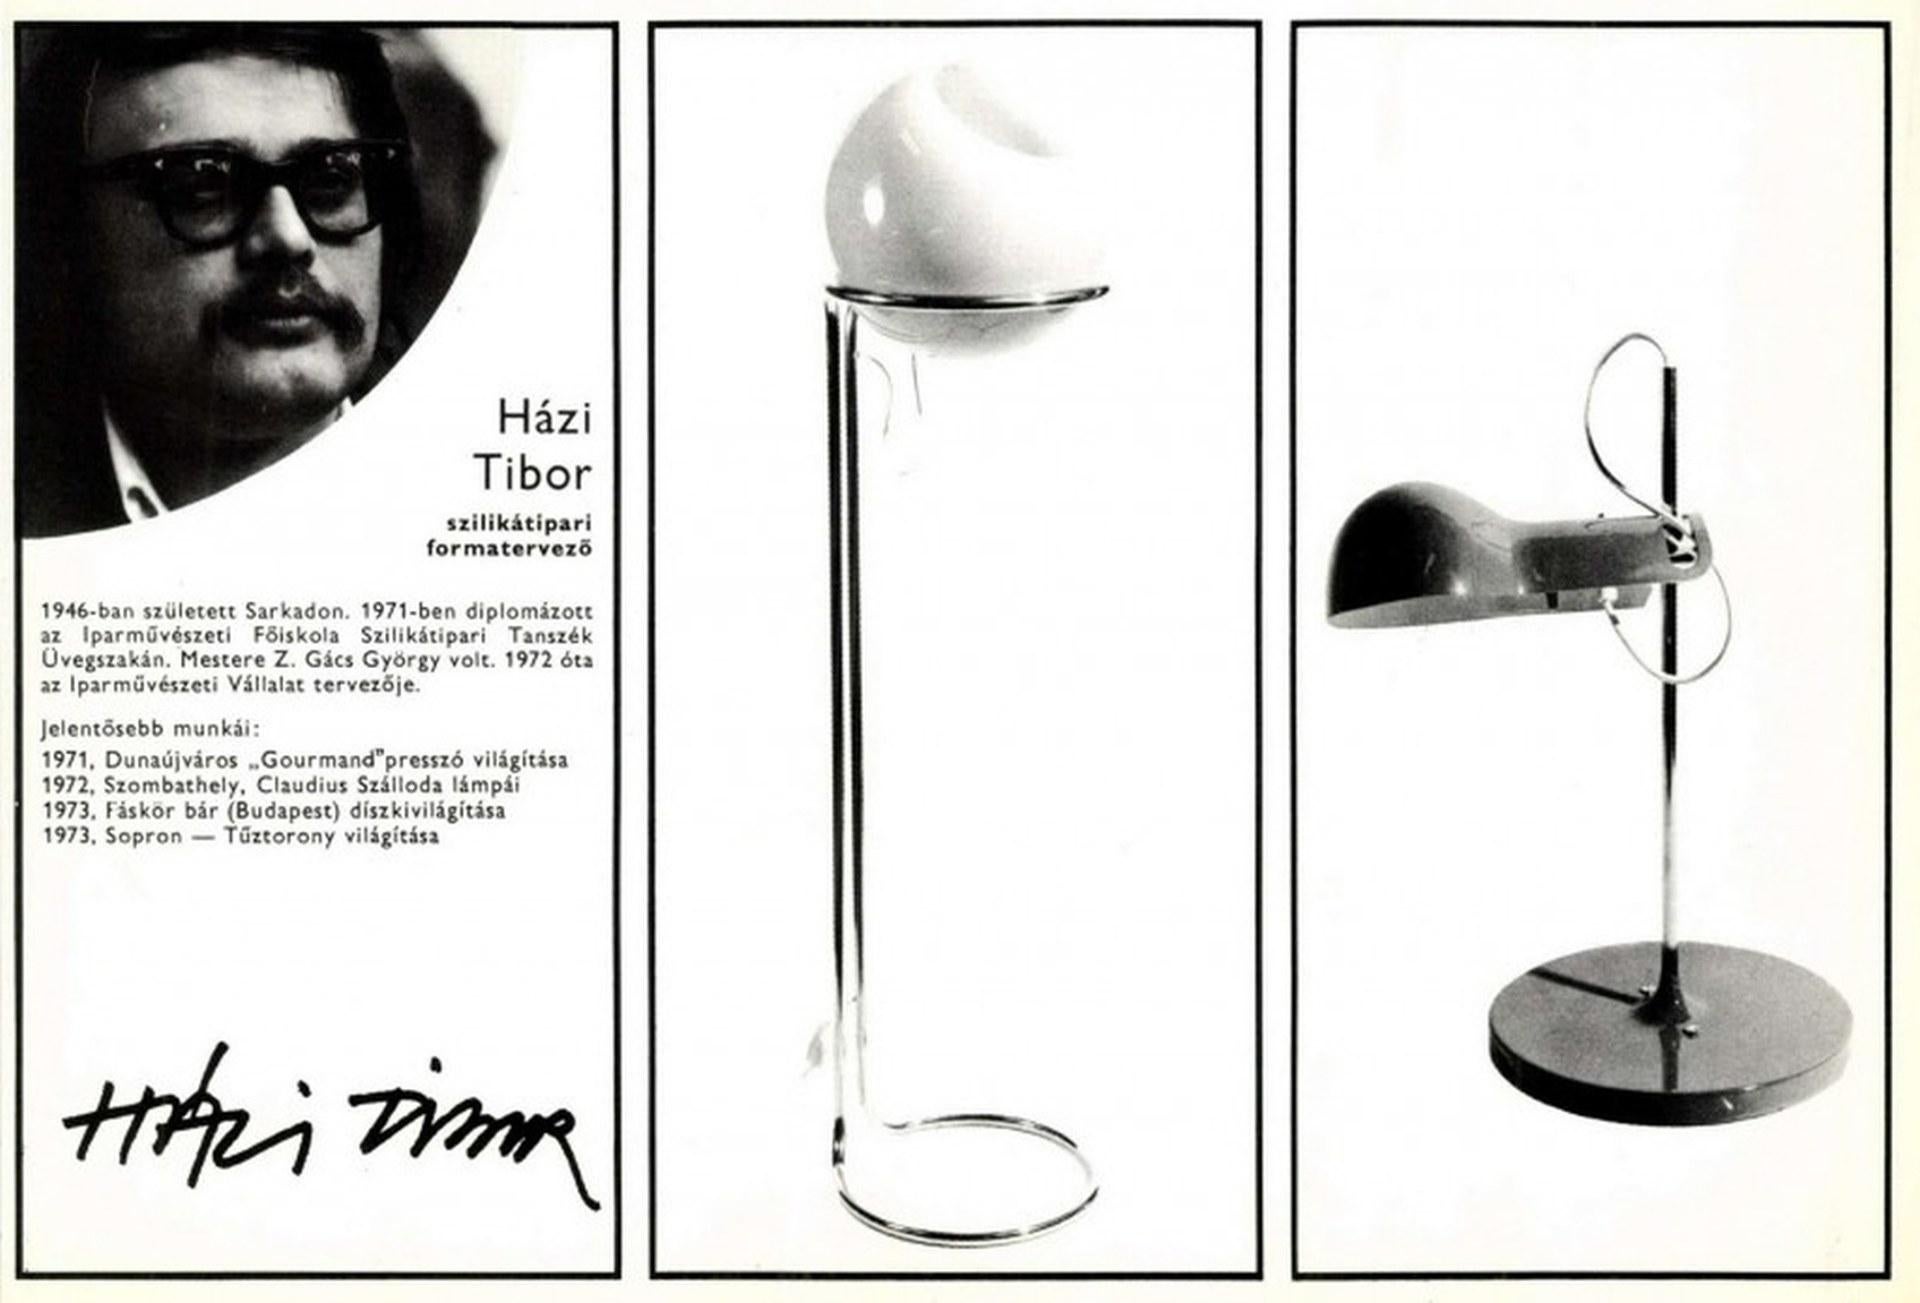 glass floor lamp by tibor hazi hungary 1973